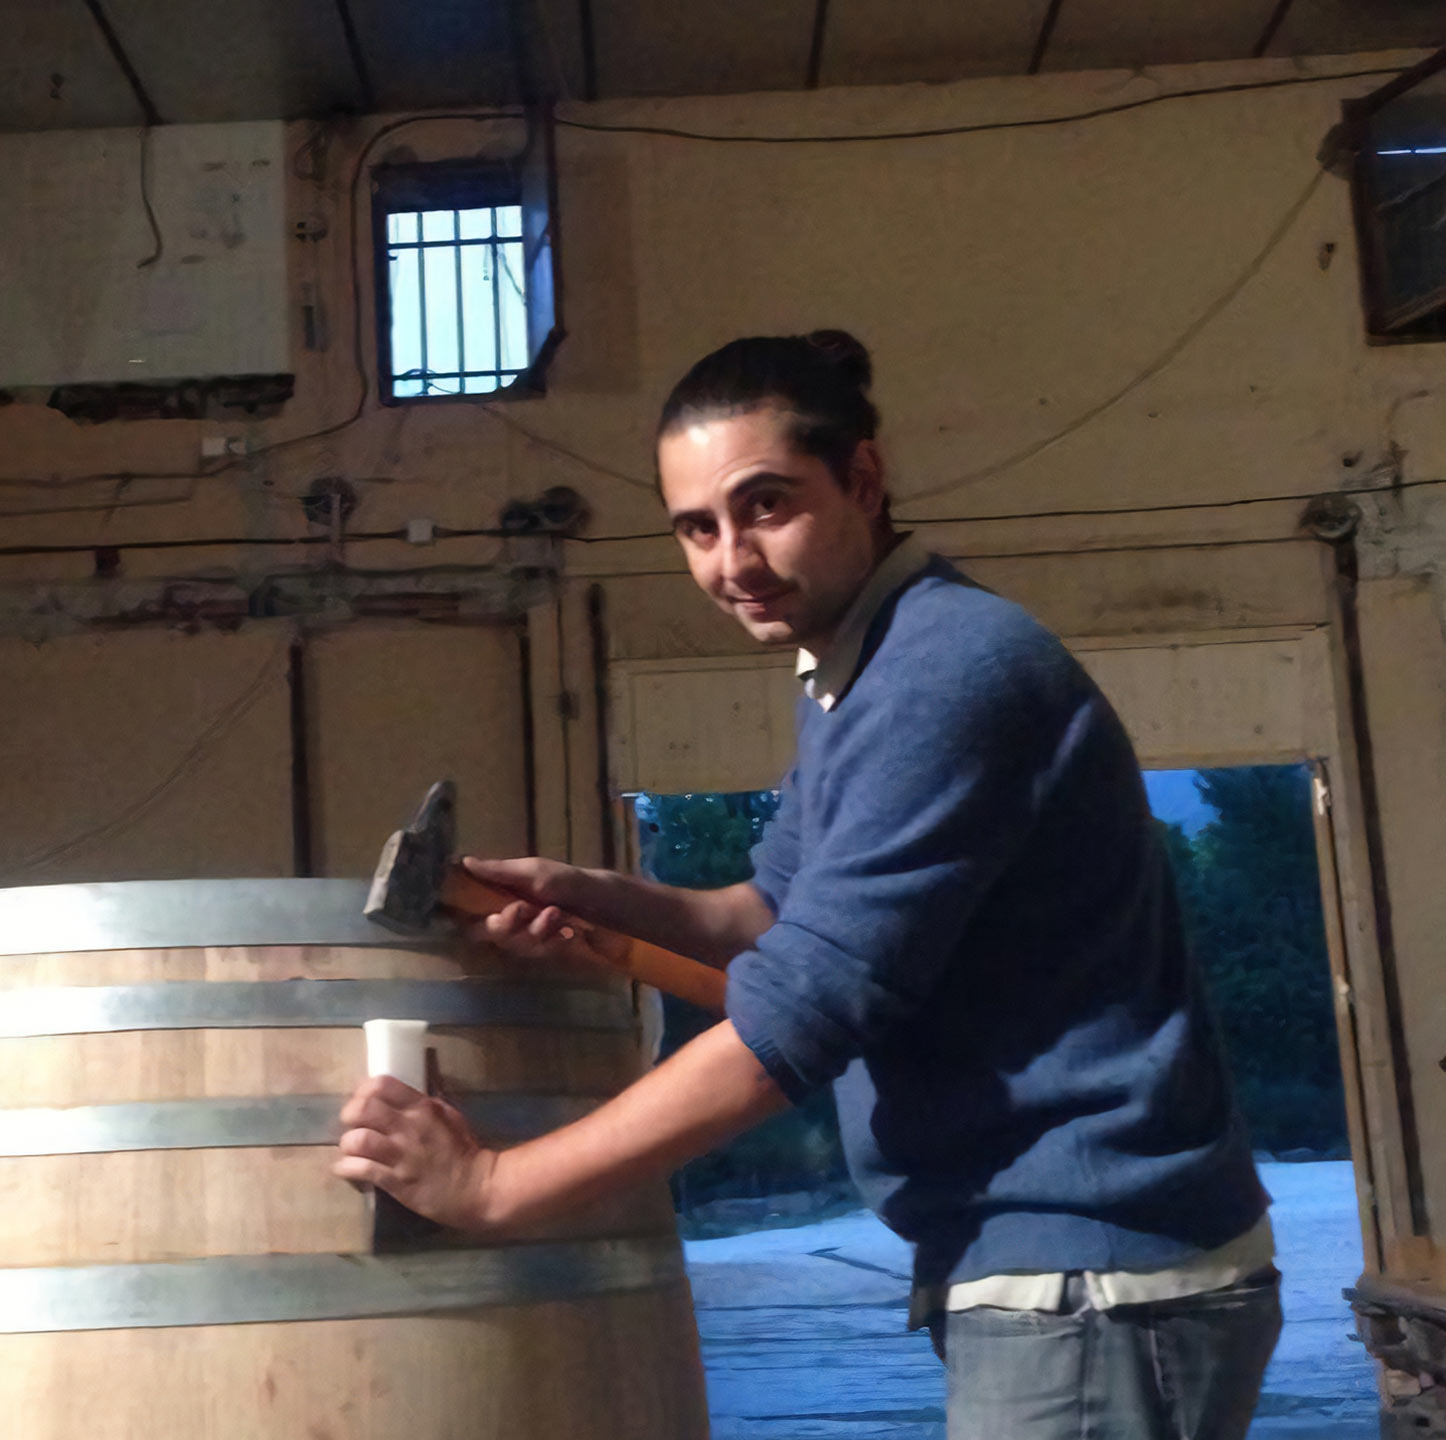 The Wine expert, Spyros Zoumpoulis